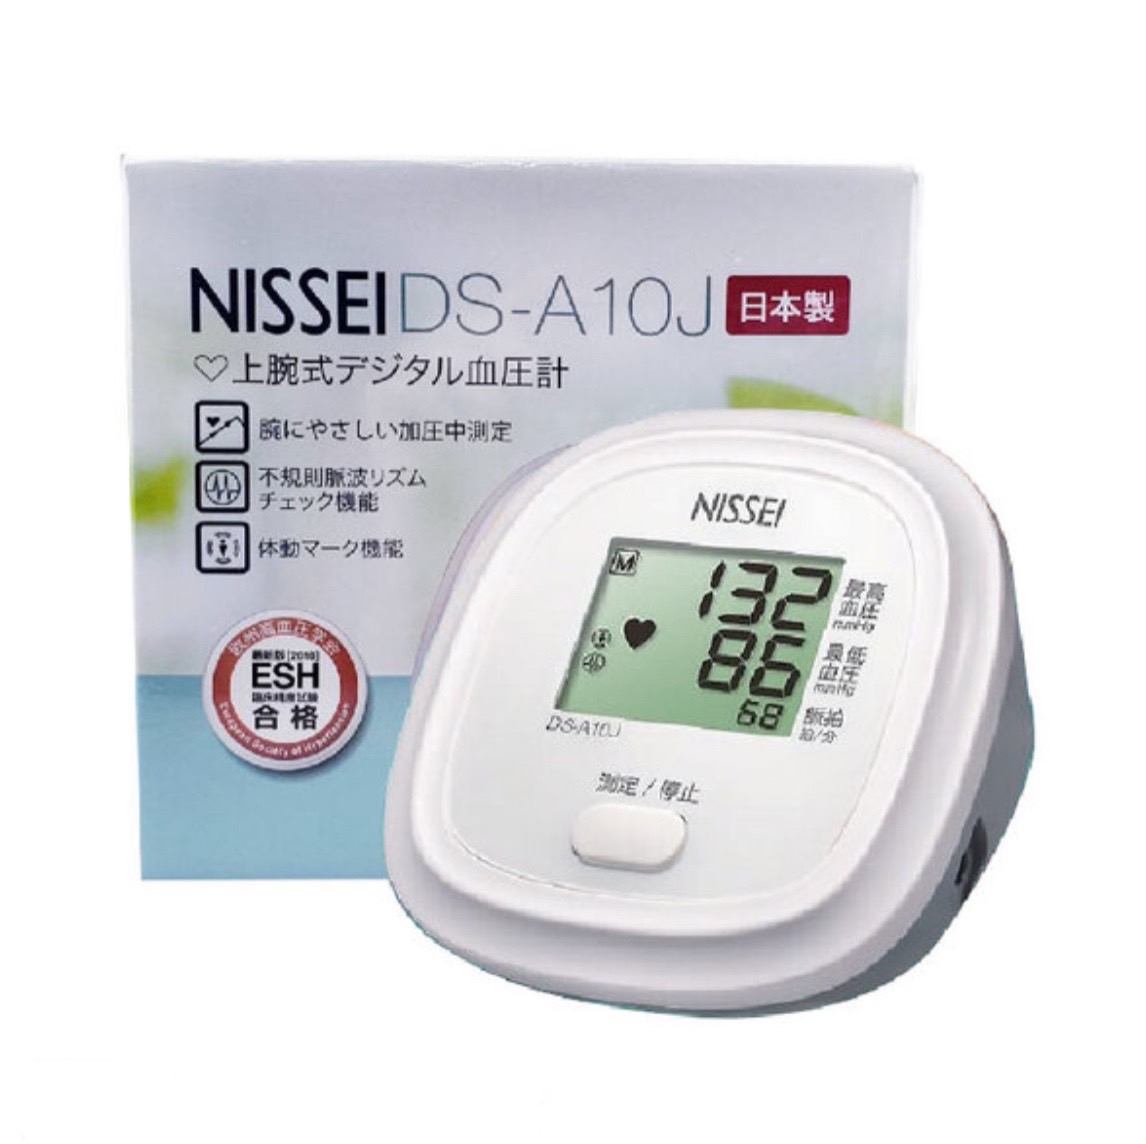 NISSEL 手臂血壓計 DS-A10J